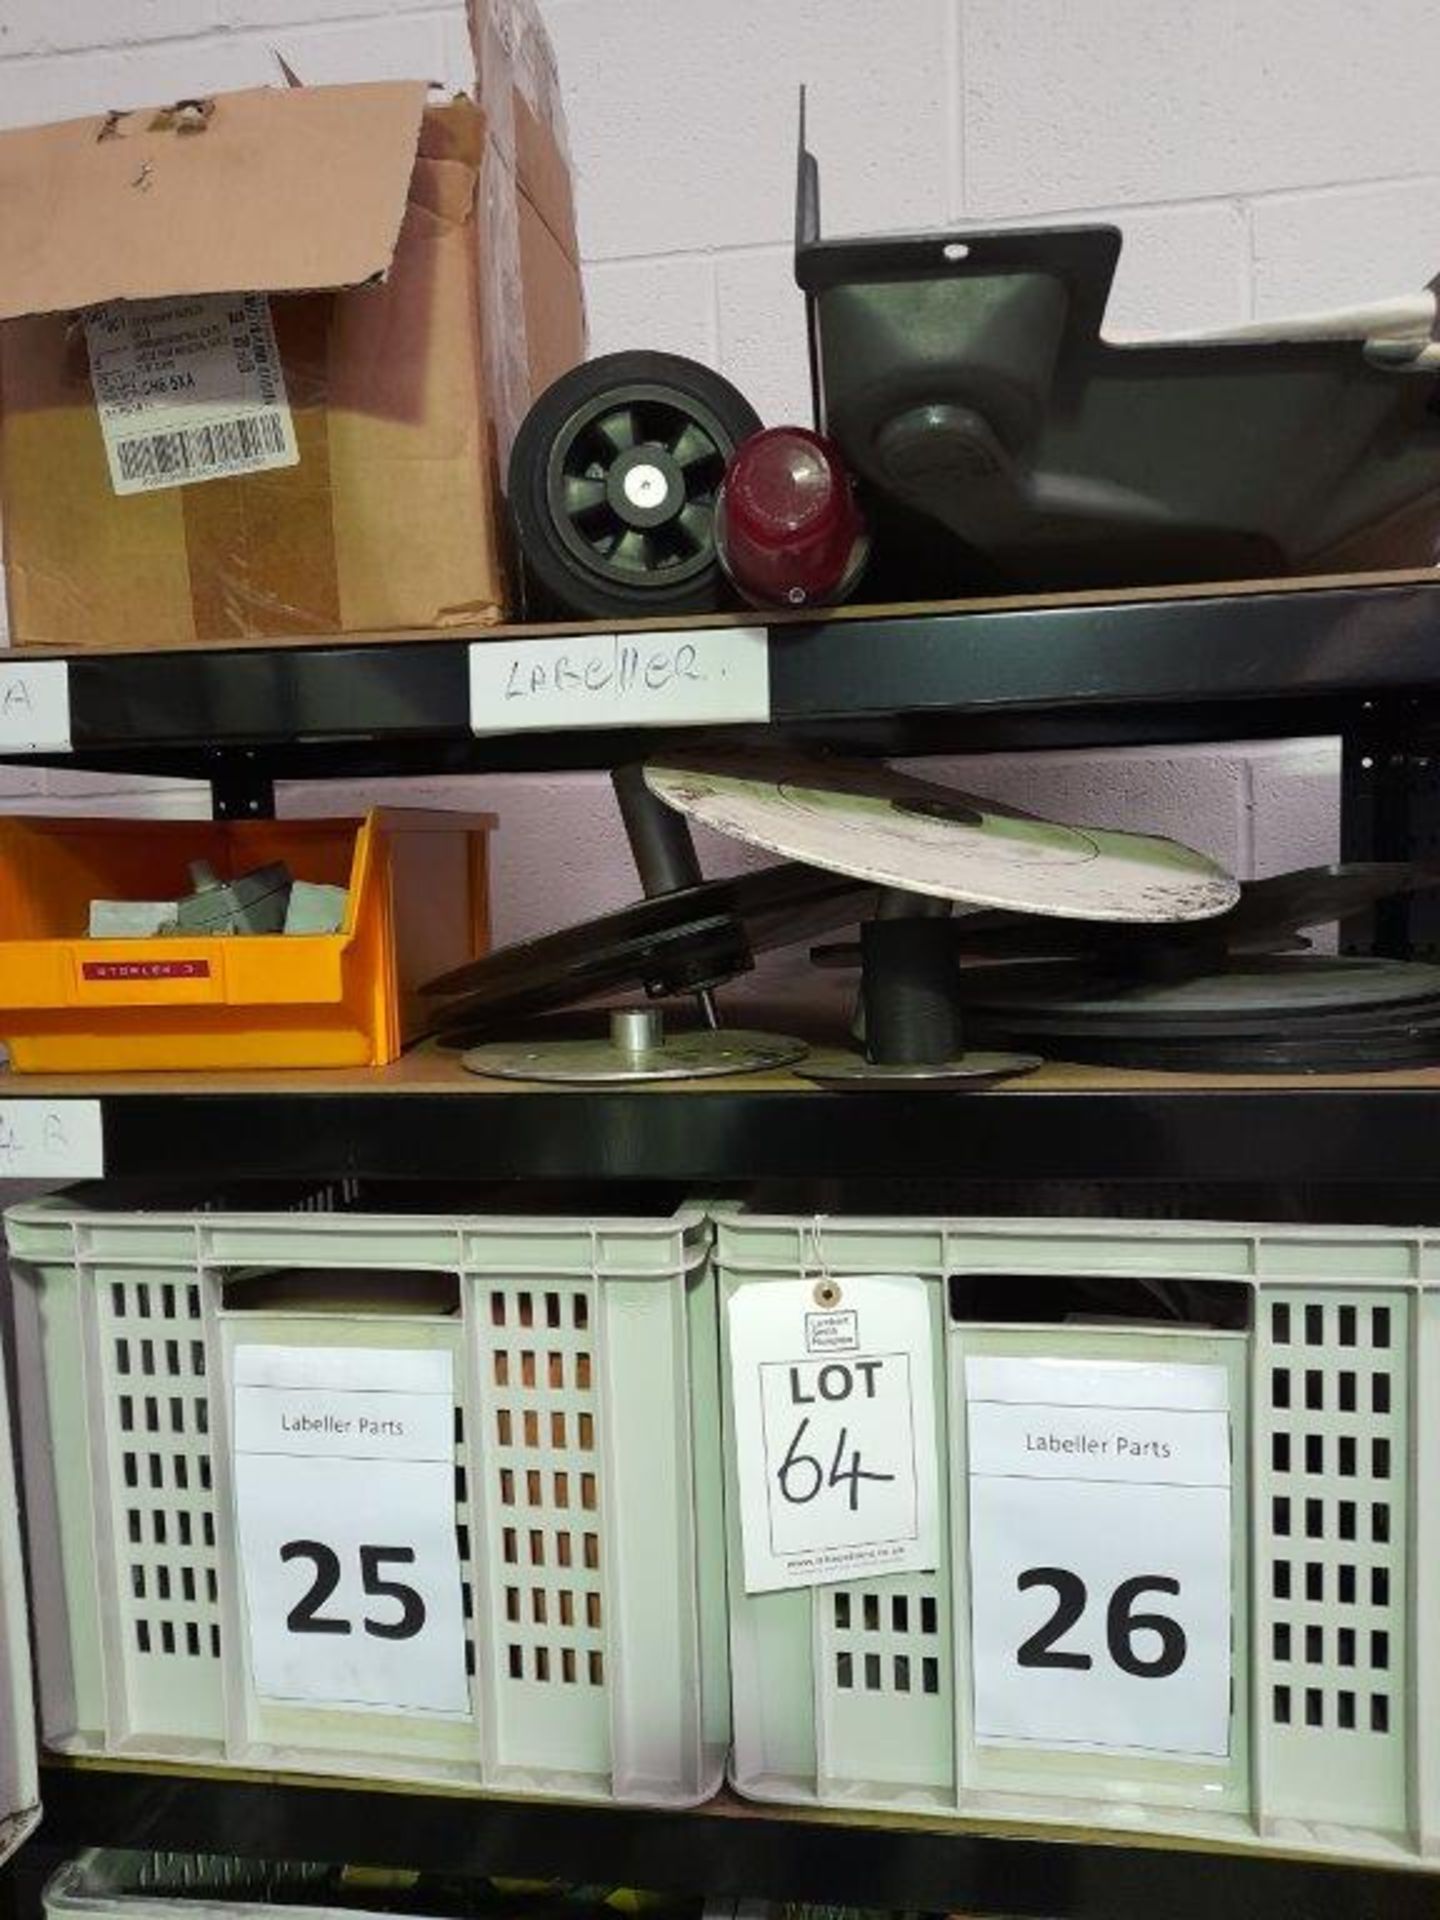 5-tier shelf unit and contents including labeller parts